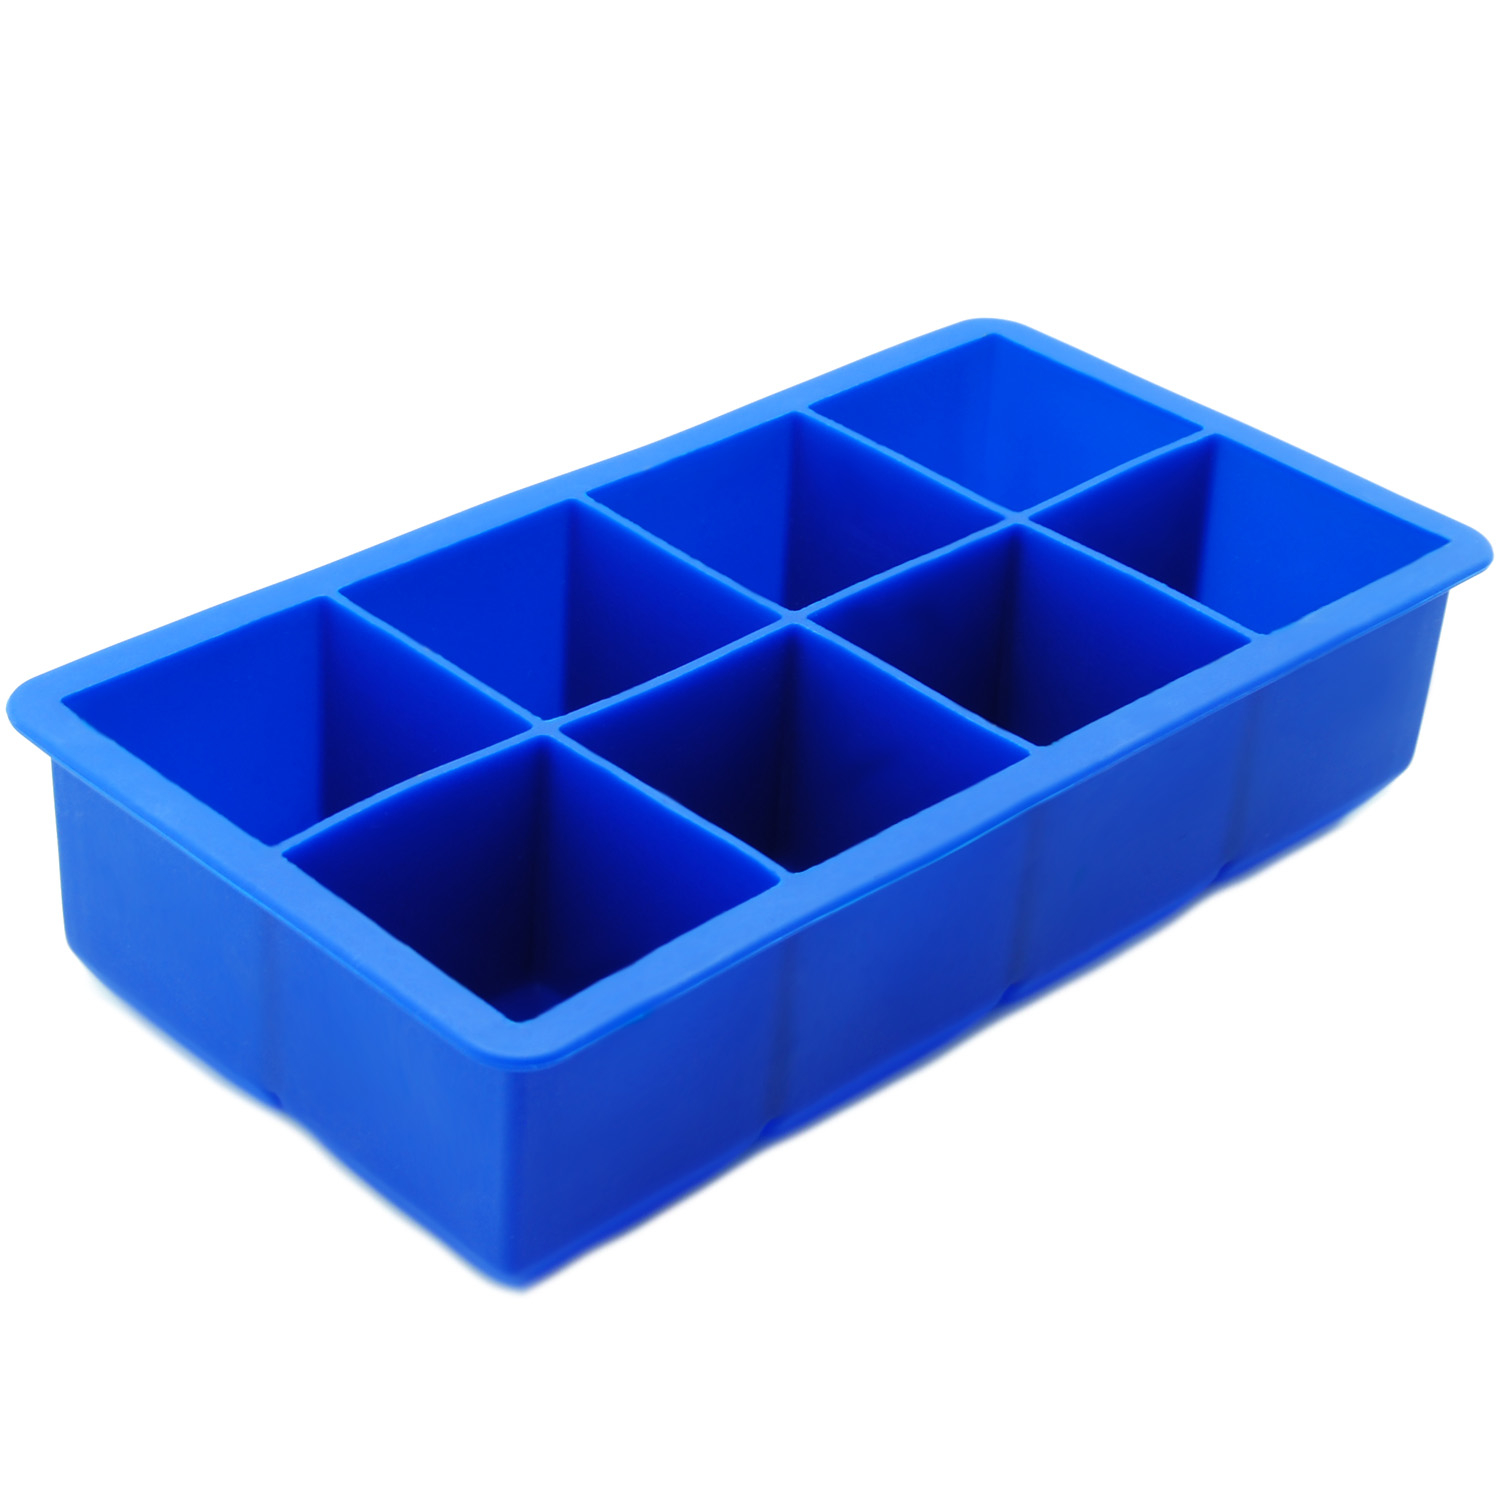 Freshware Silicone Ice Cube Trays, 2-Inch, Blue, 8-Cavity